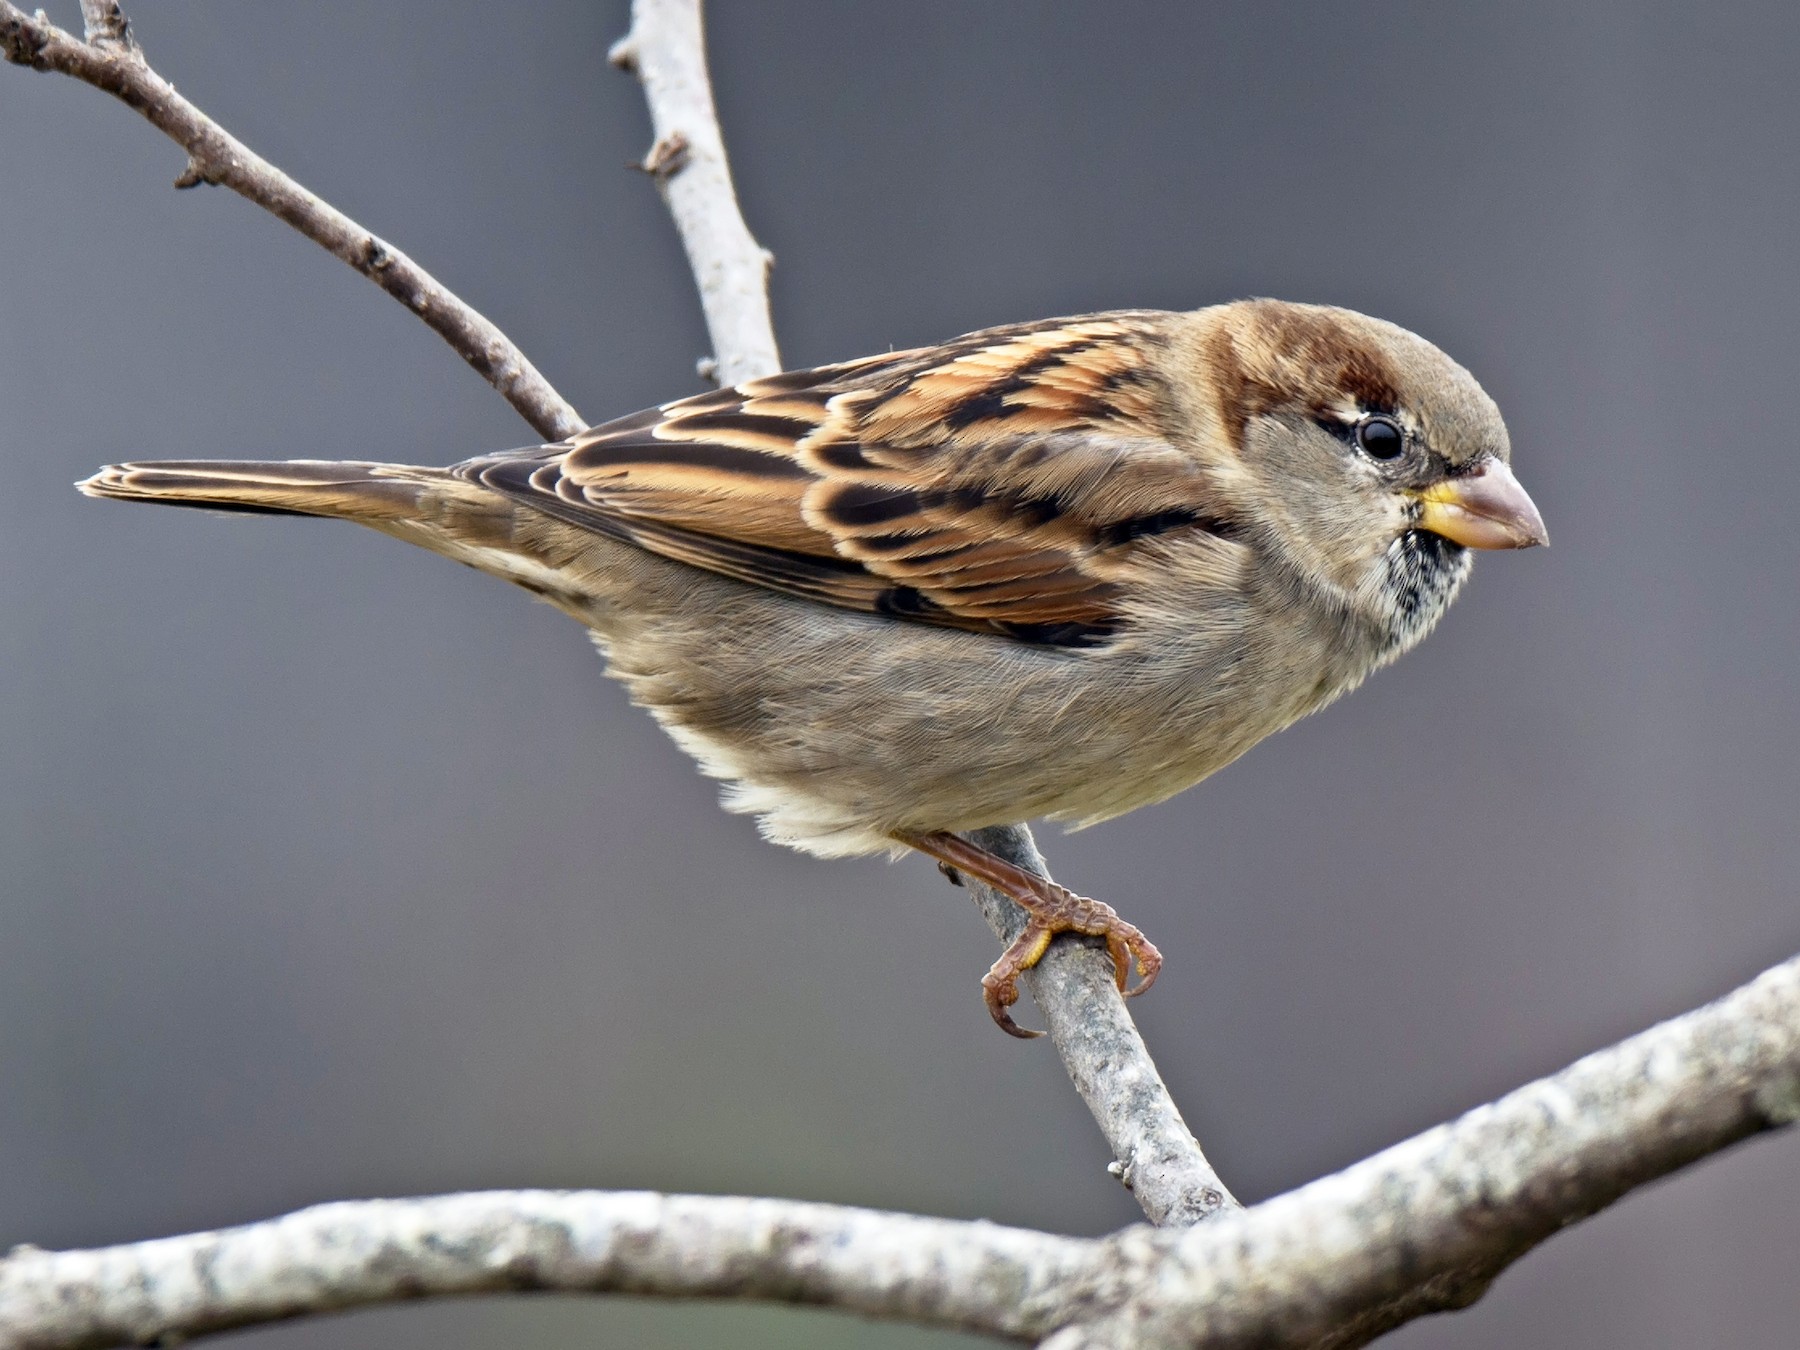 Extraordinary Wildlife in Your Backyard. Season 1, Episode I: Desperate House Sparrows